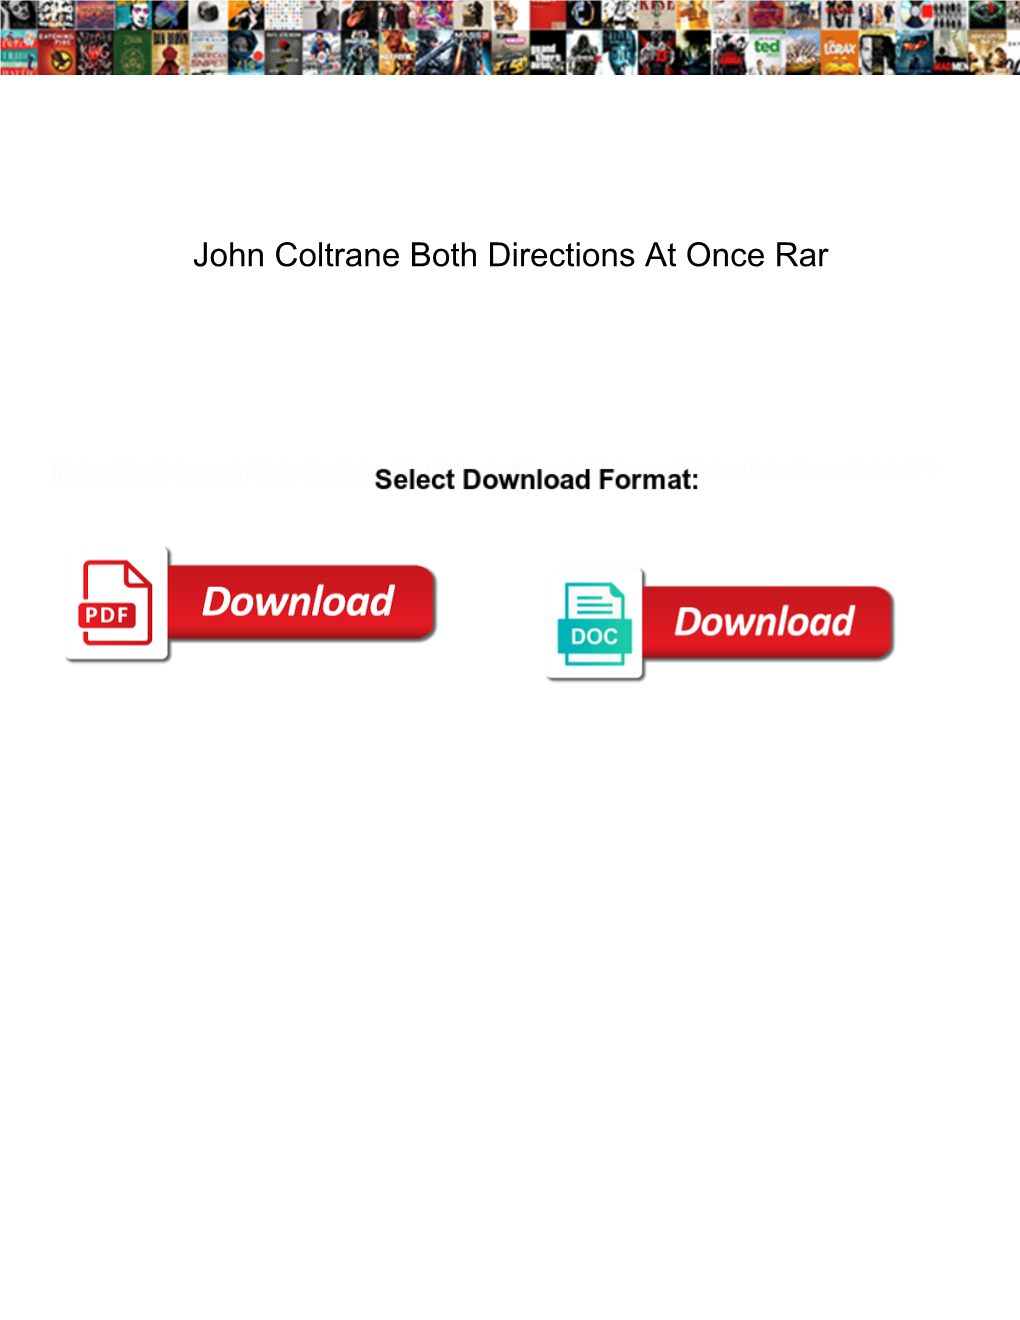 John Coltrane Both Directions at Once Rar